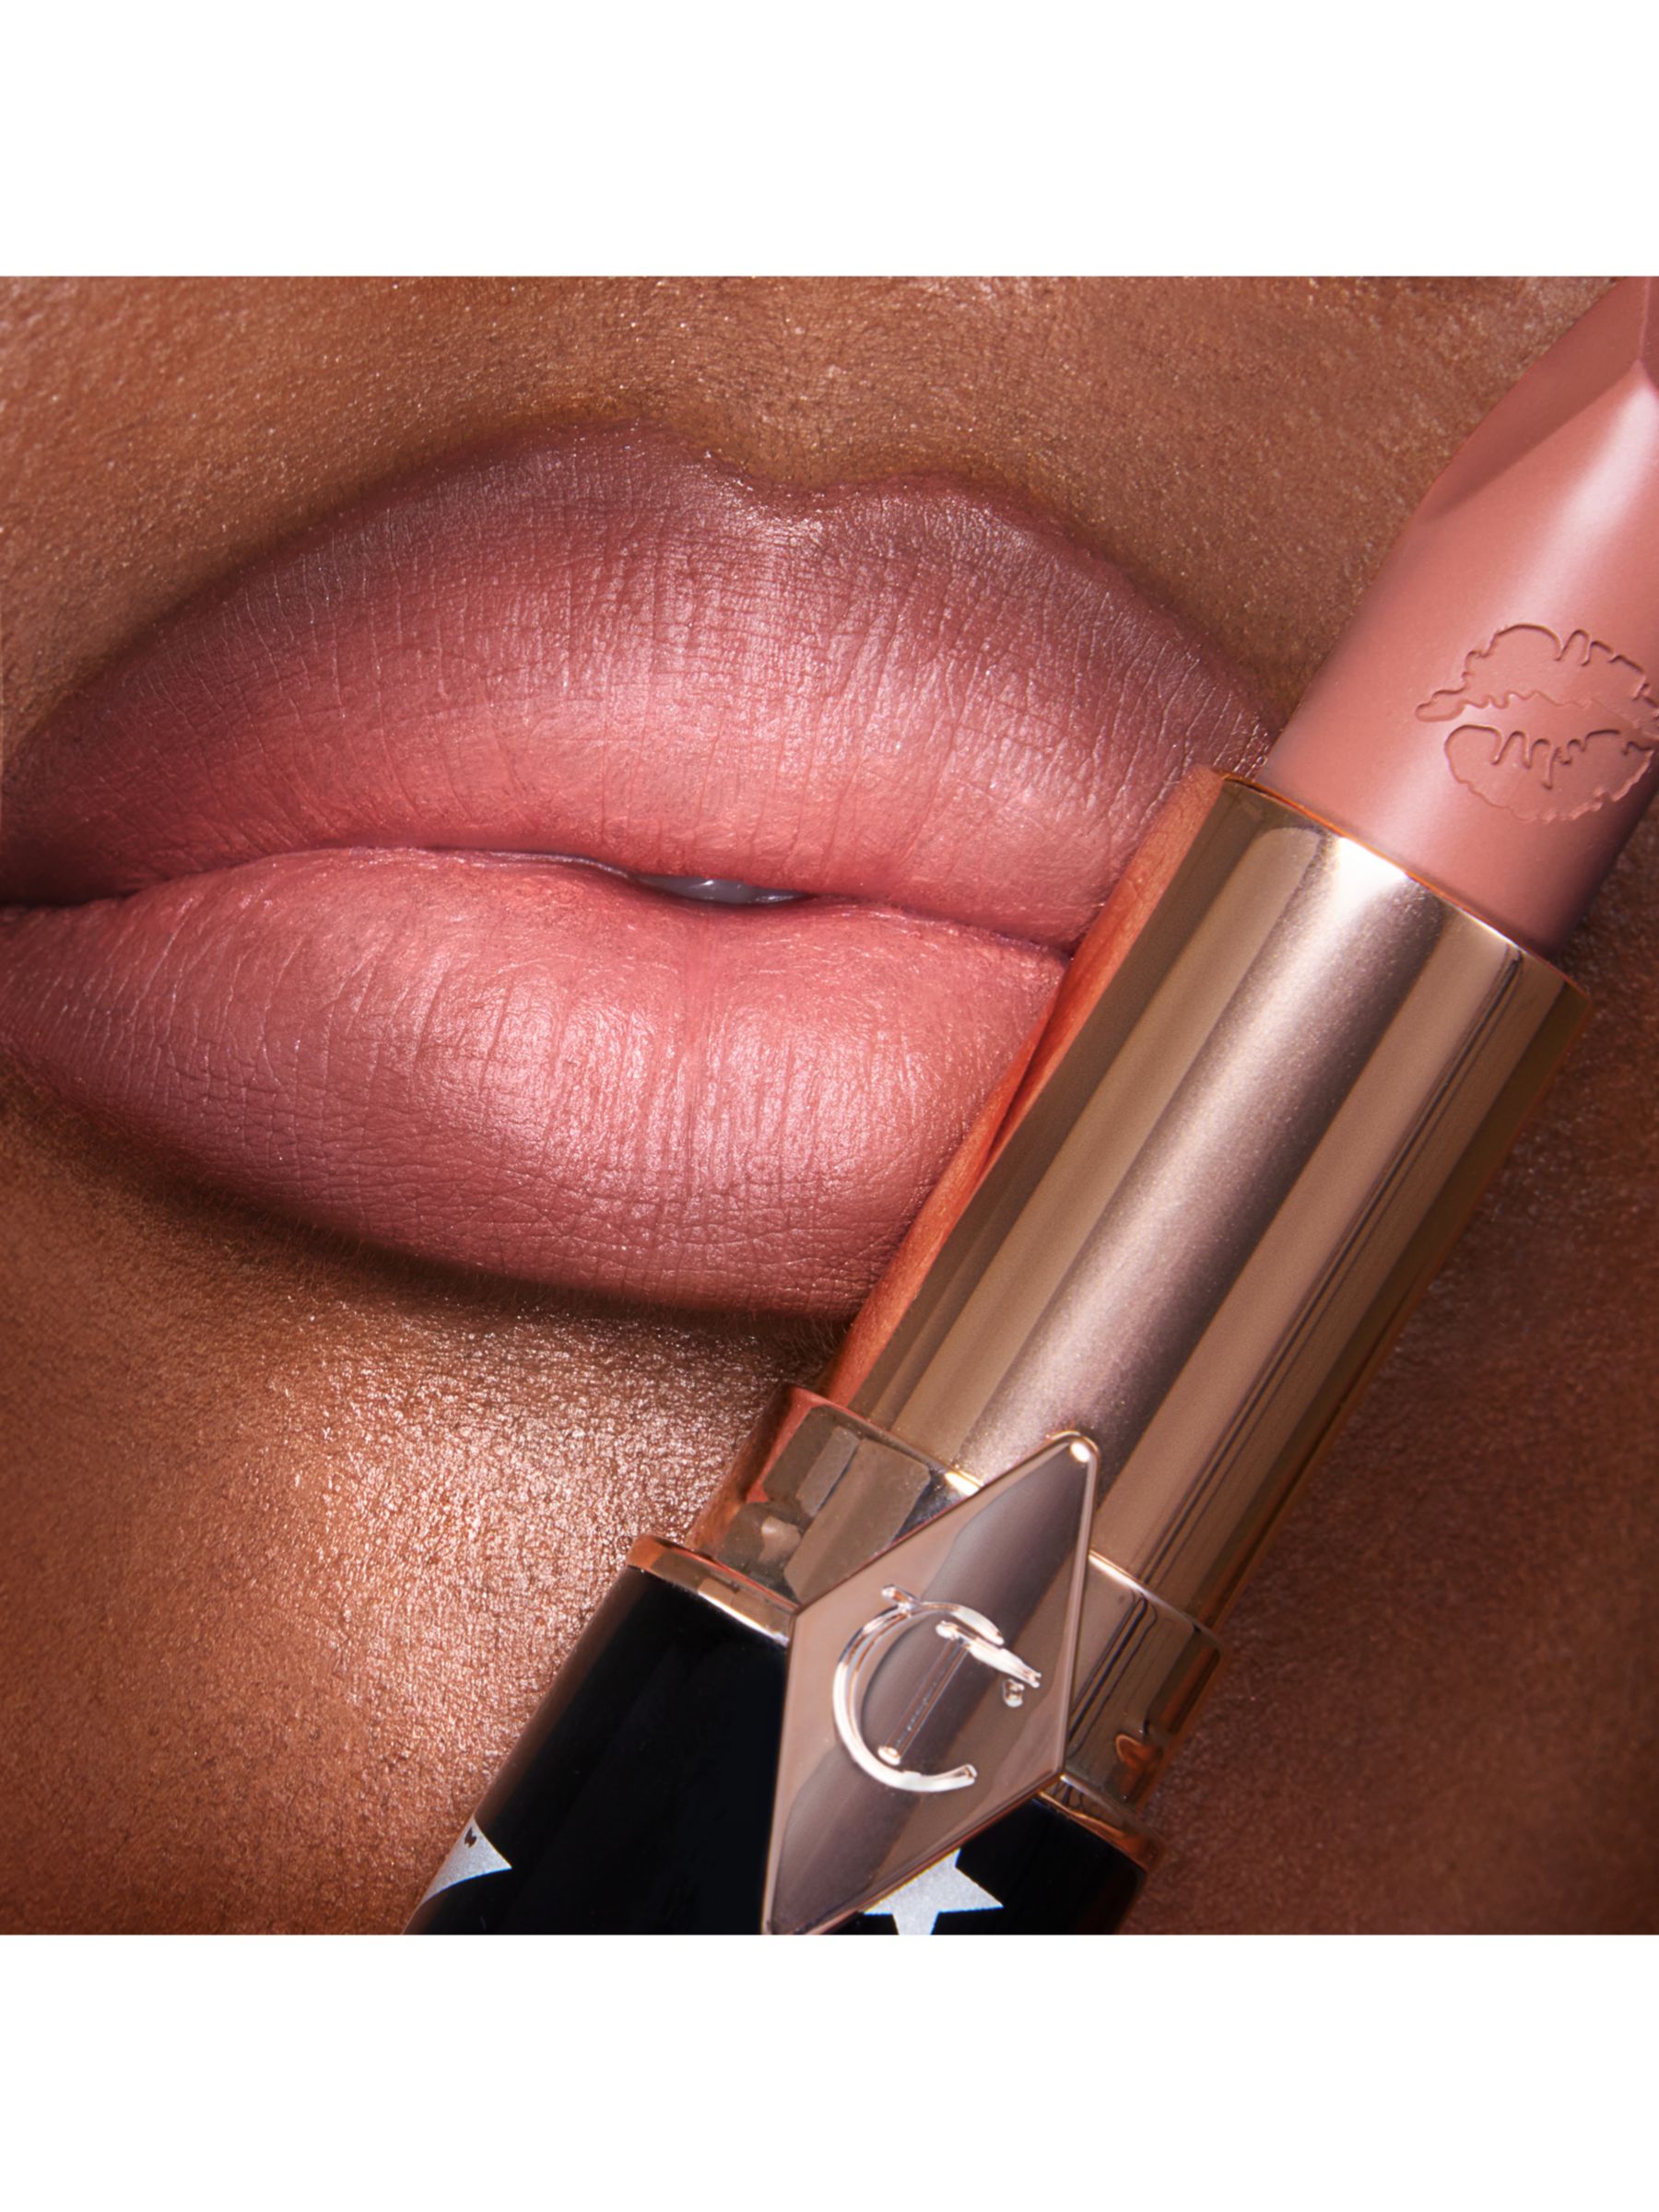 Charlotte Tilbury Limited Edition Rock Lips Lipstick, Rocket Girl 5